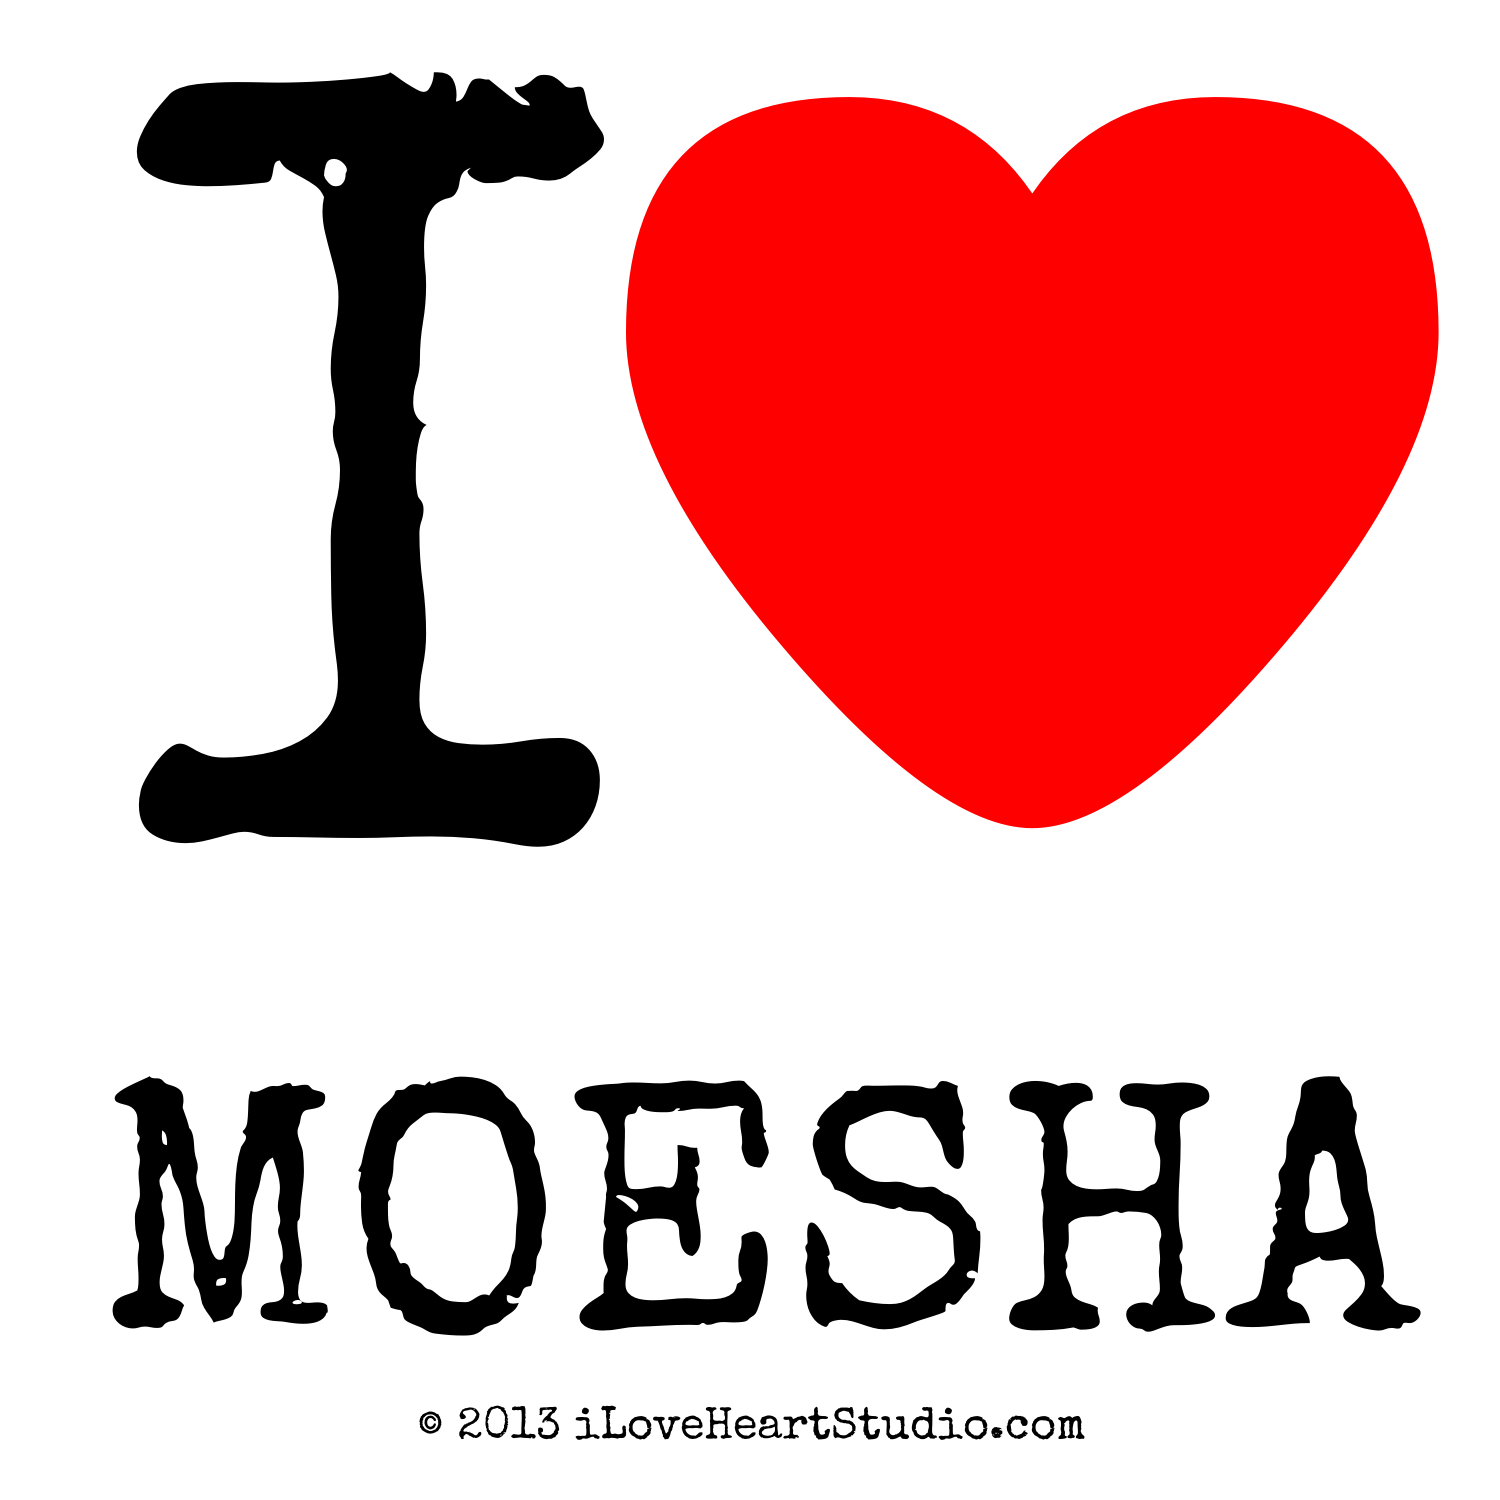 Moesha Logo - I [Love Heart] Moesha' Design On T Shirt, Poster, Mug And Many Other